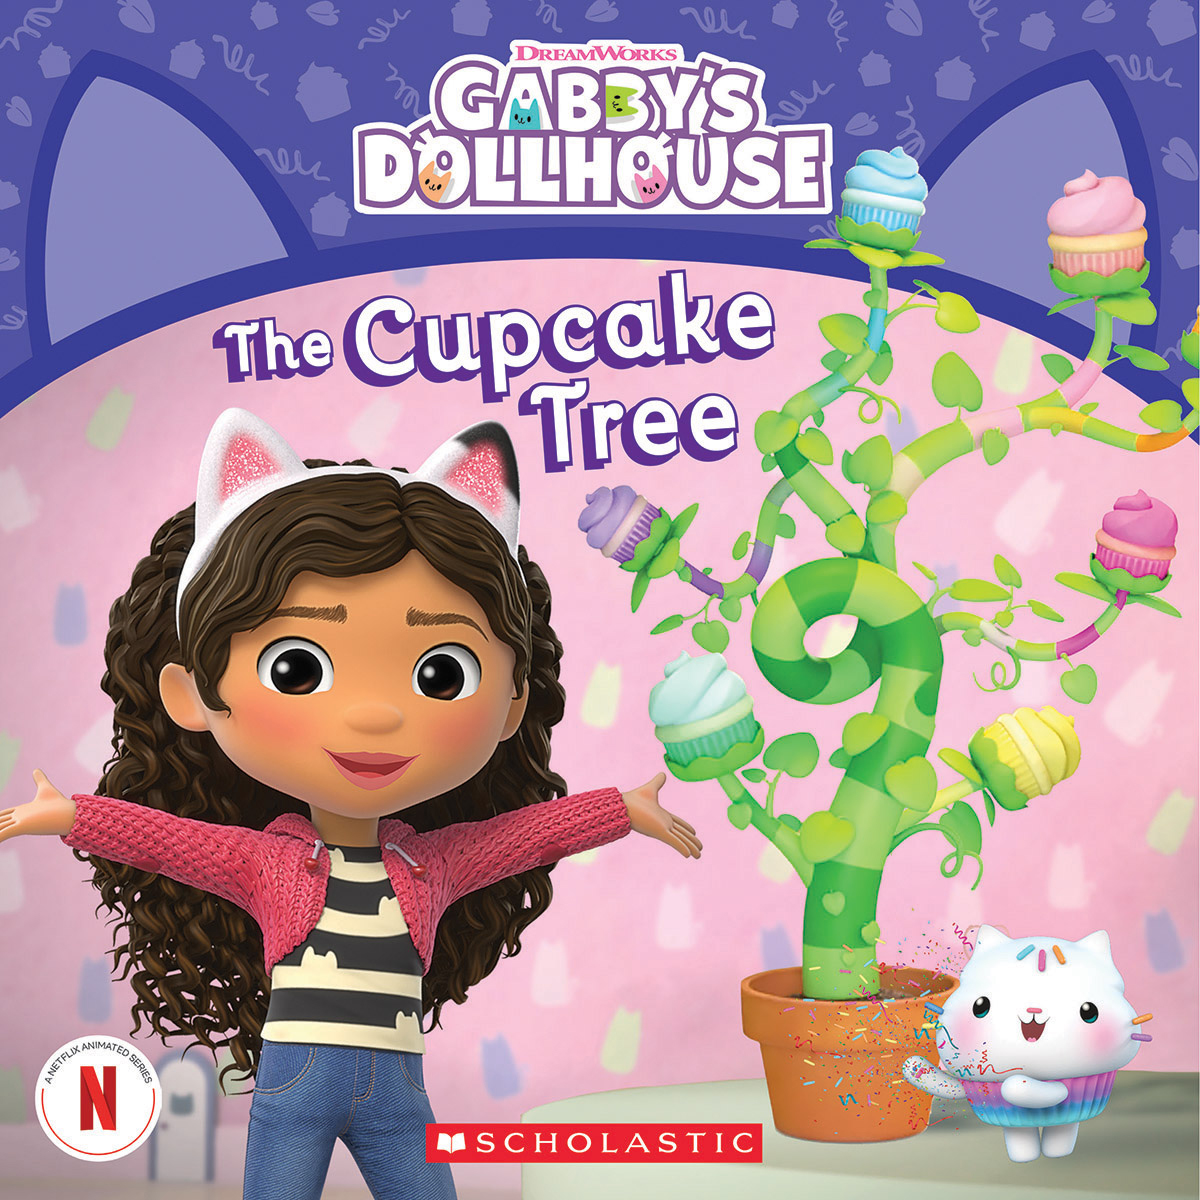  Gabby's Dollhouse: The Cupcake Tree 